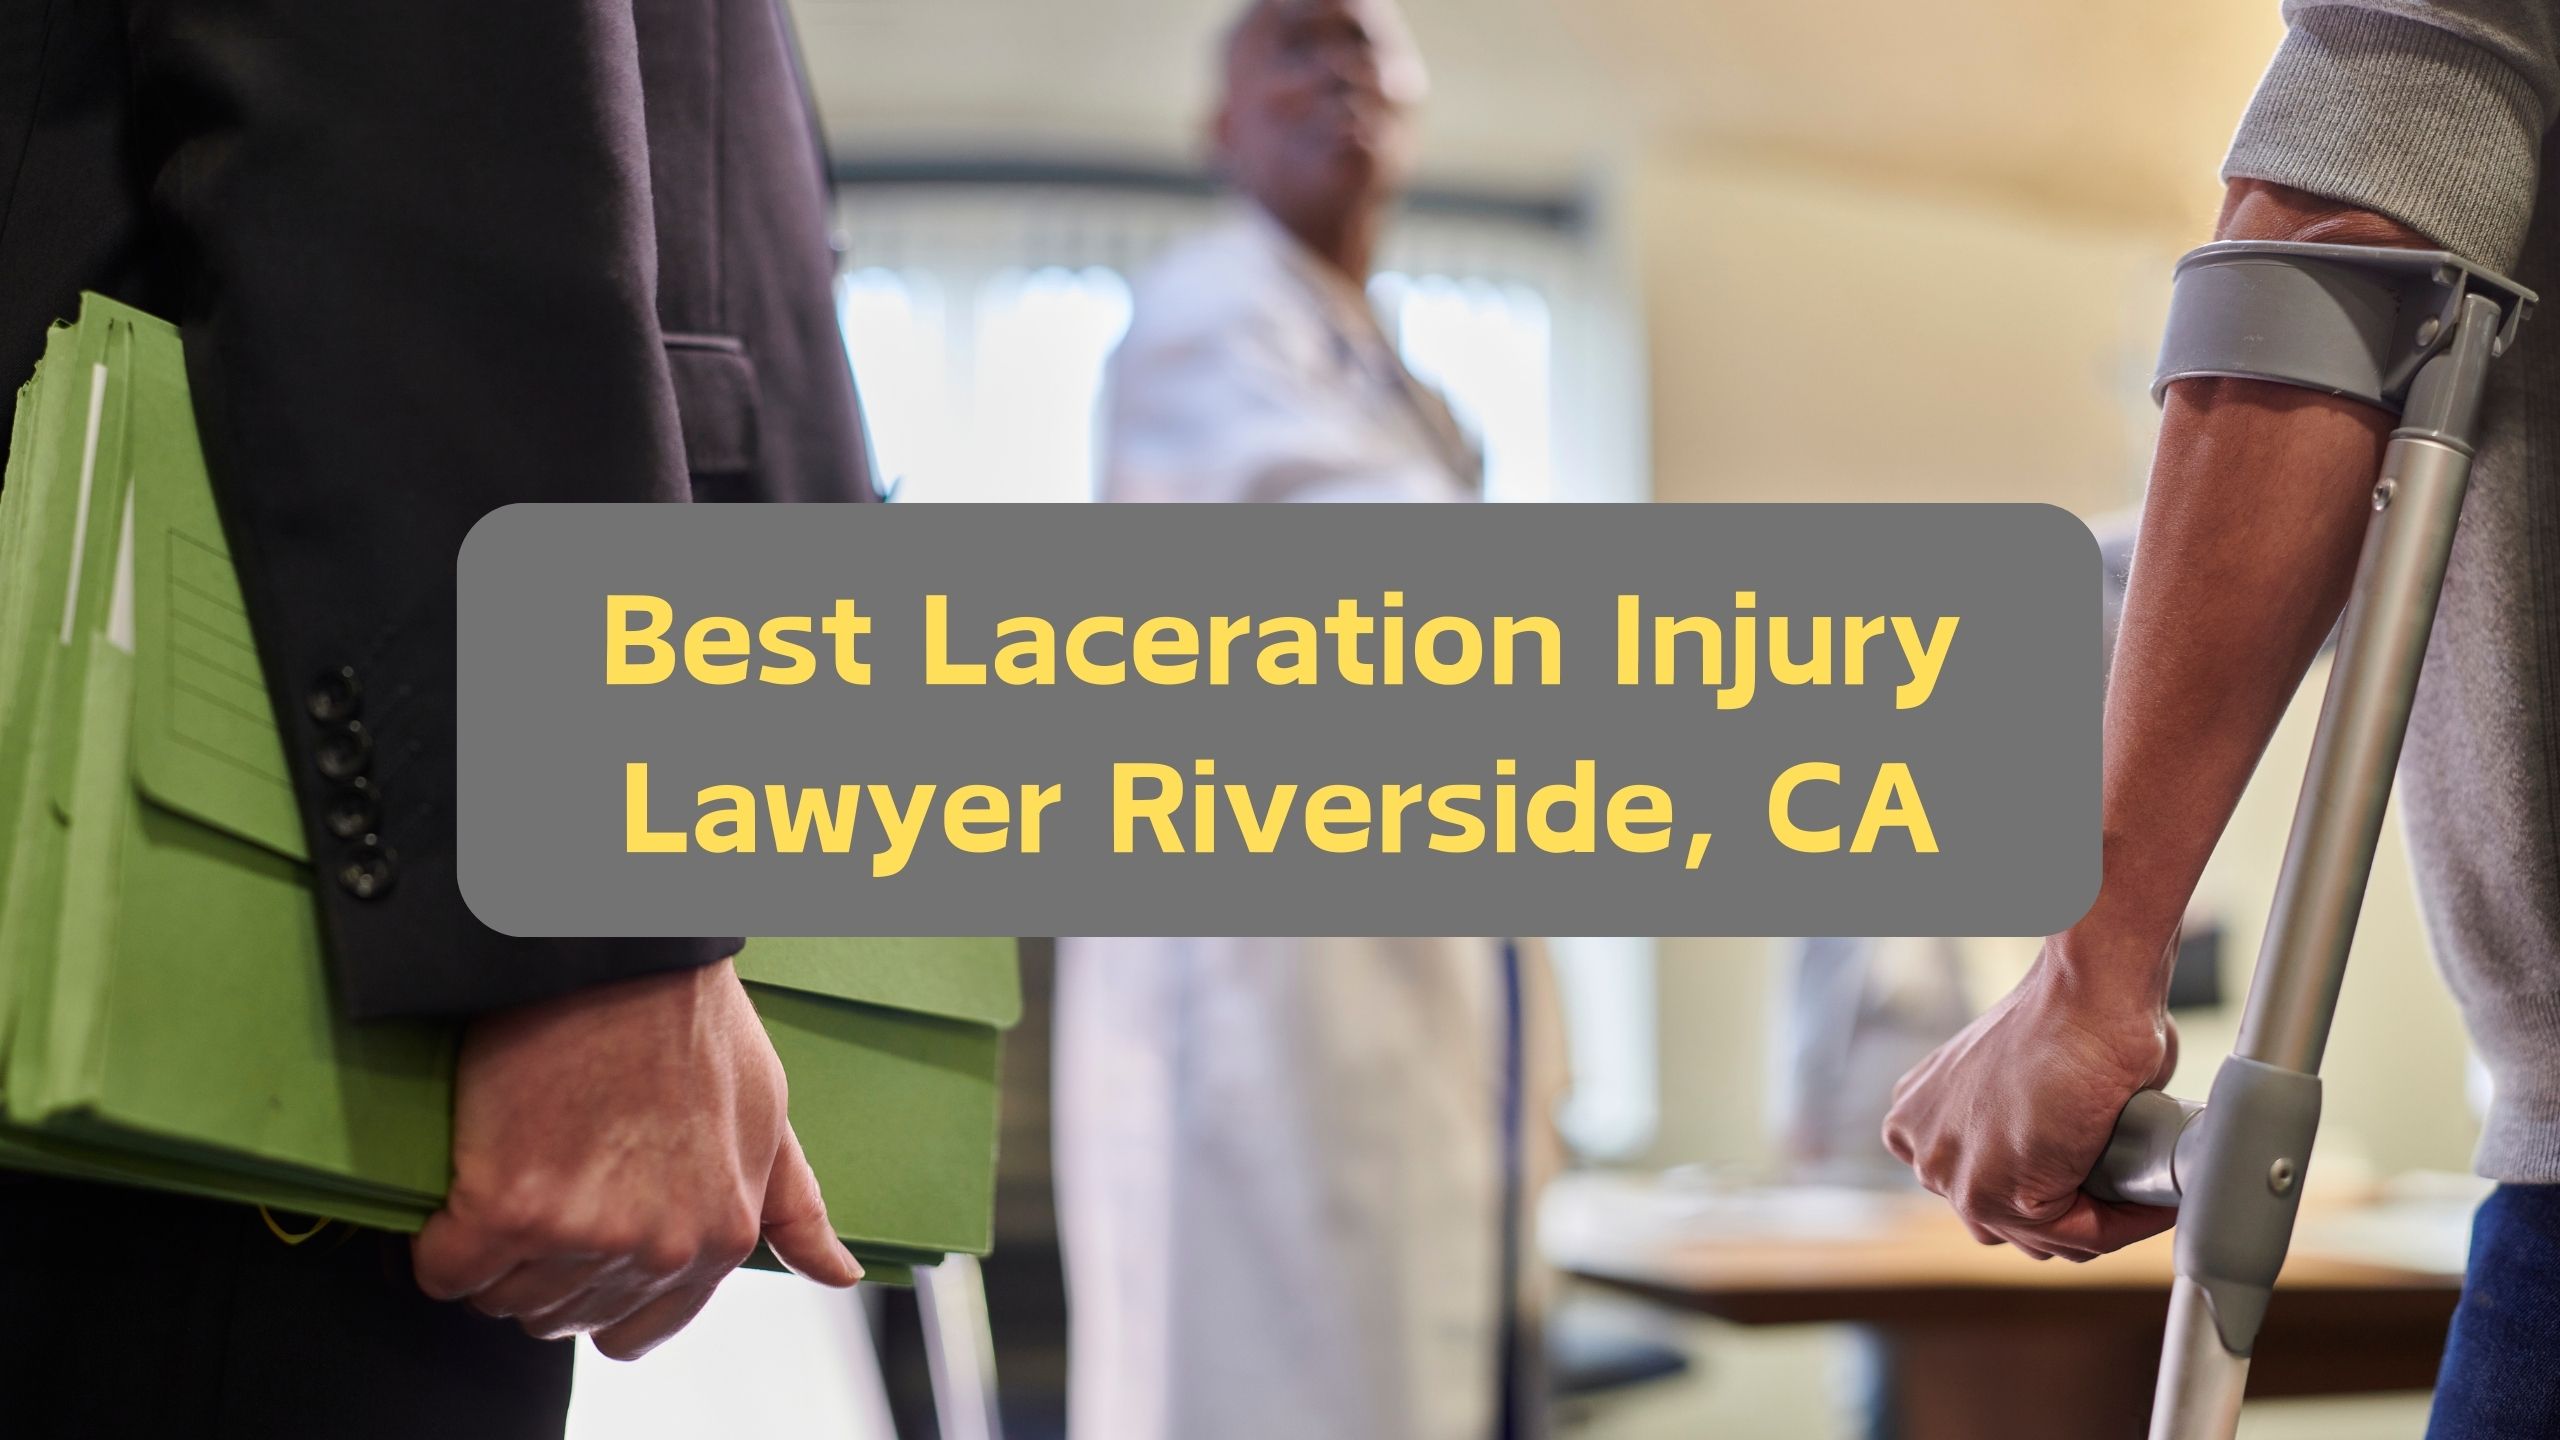 Best Laceration Injury Lawyer Riverside